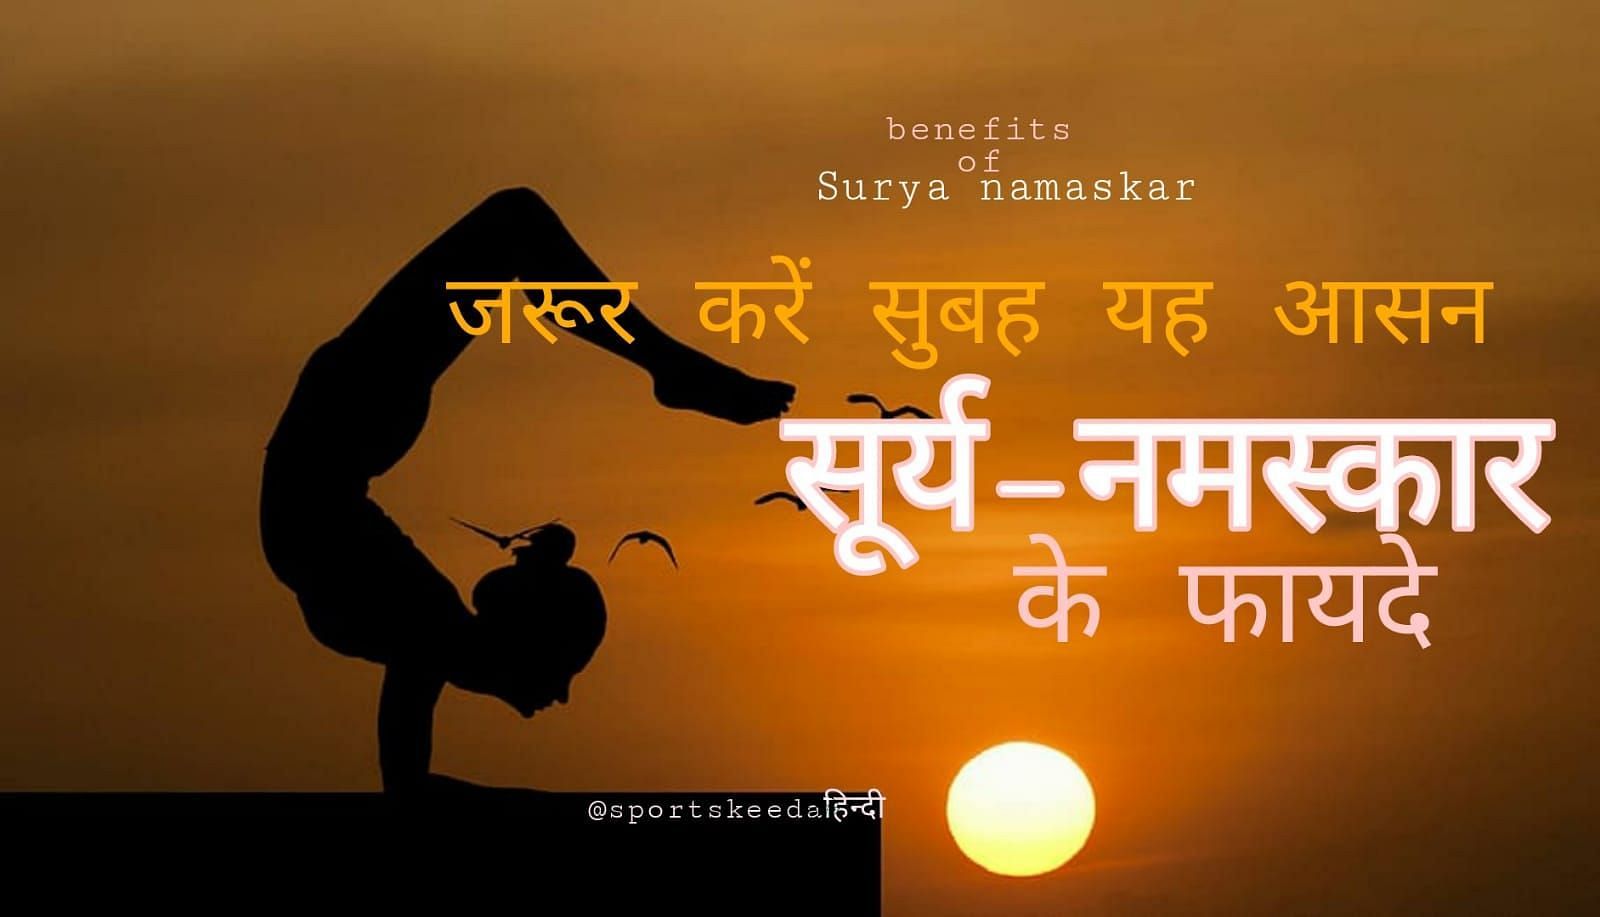 सूर्य नमस्कार के 10 फायदे (source - sportskeeda hindi)